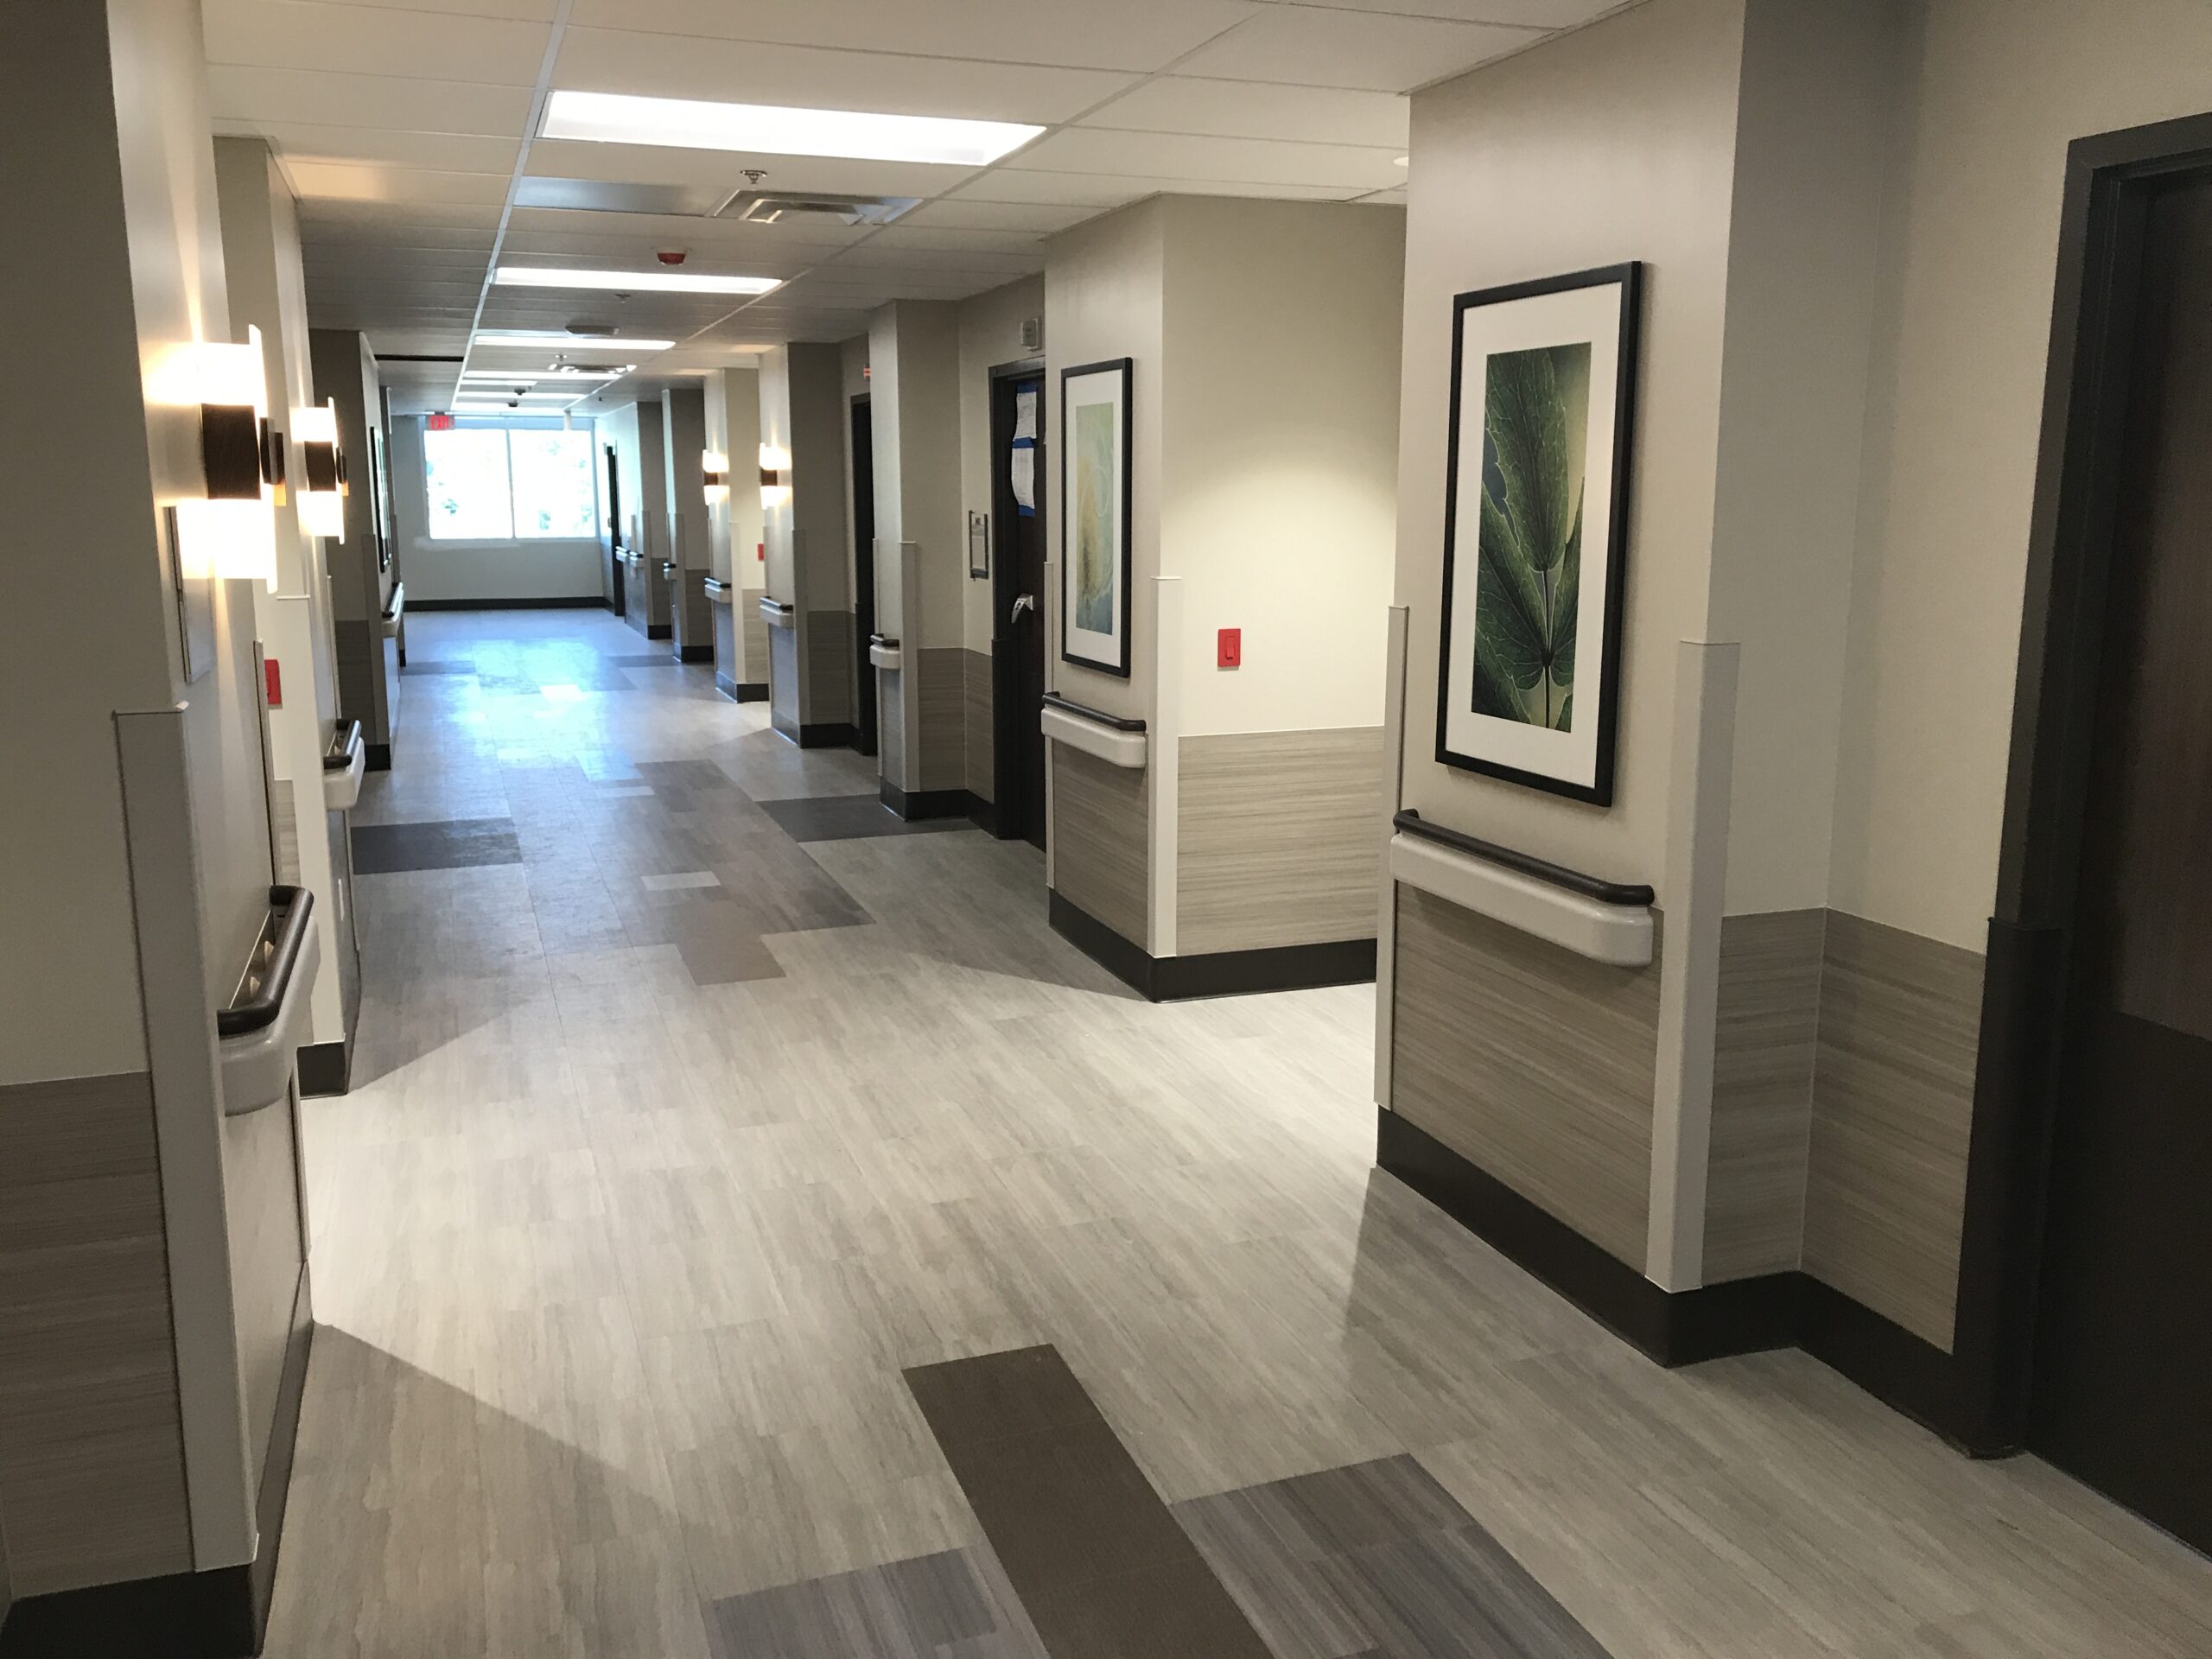 North Alabama Medical Center Hallway 2